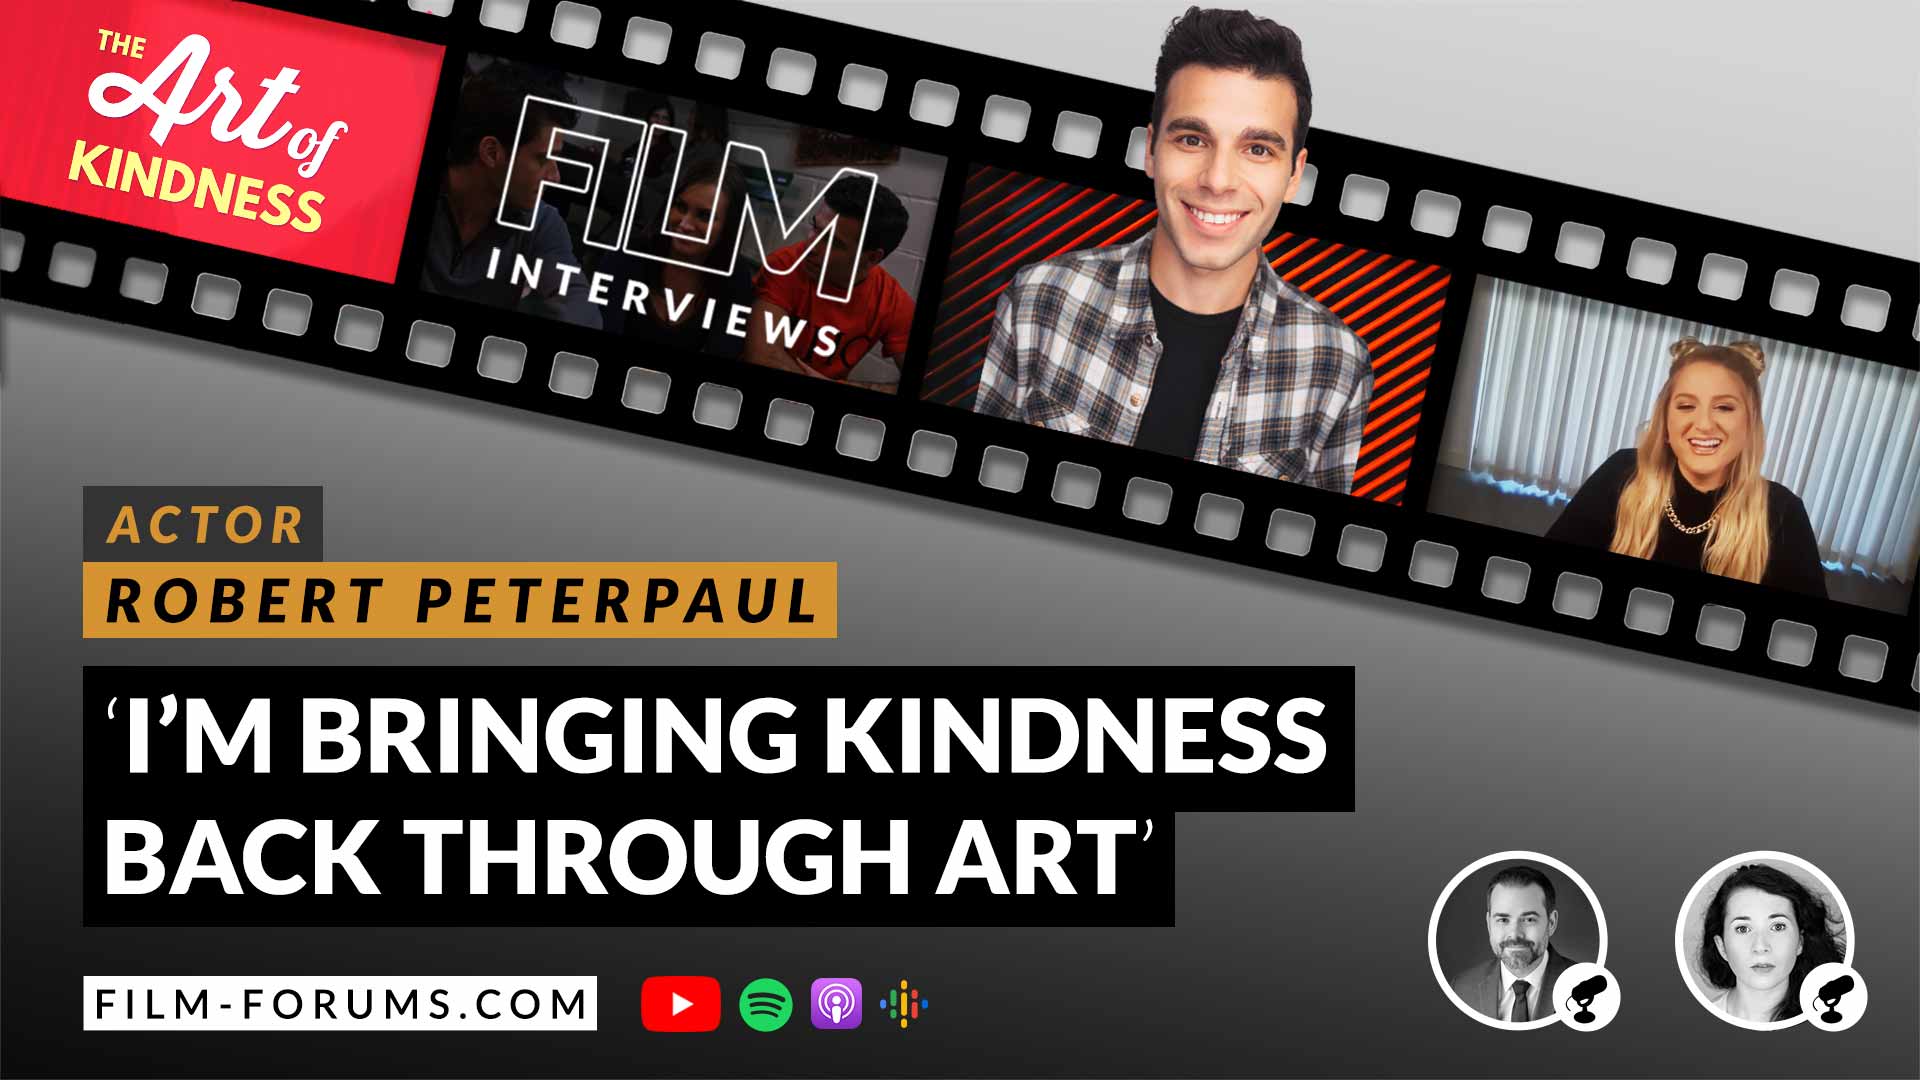 The Art of Kindness Robert Peterpaul